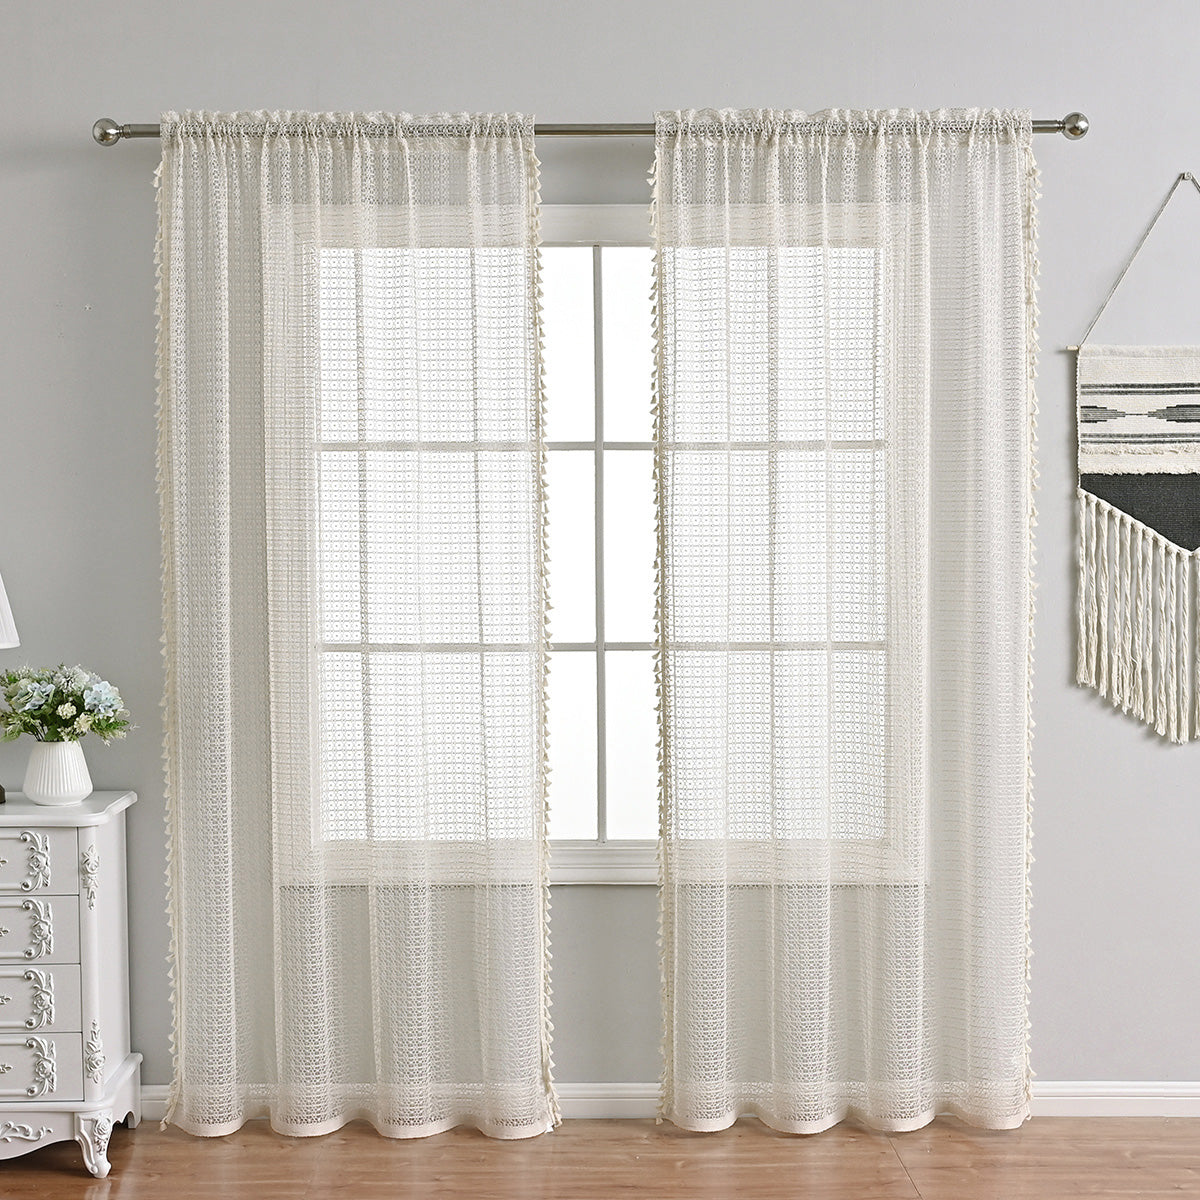 French Sheer Curtain Romantic, Beige, Living Room/Bedroom